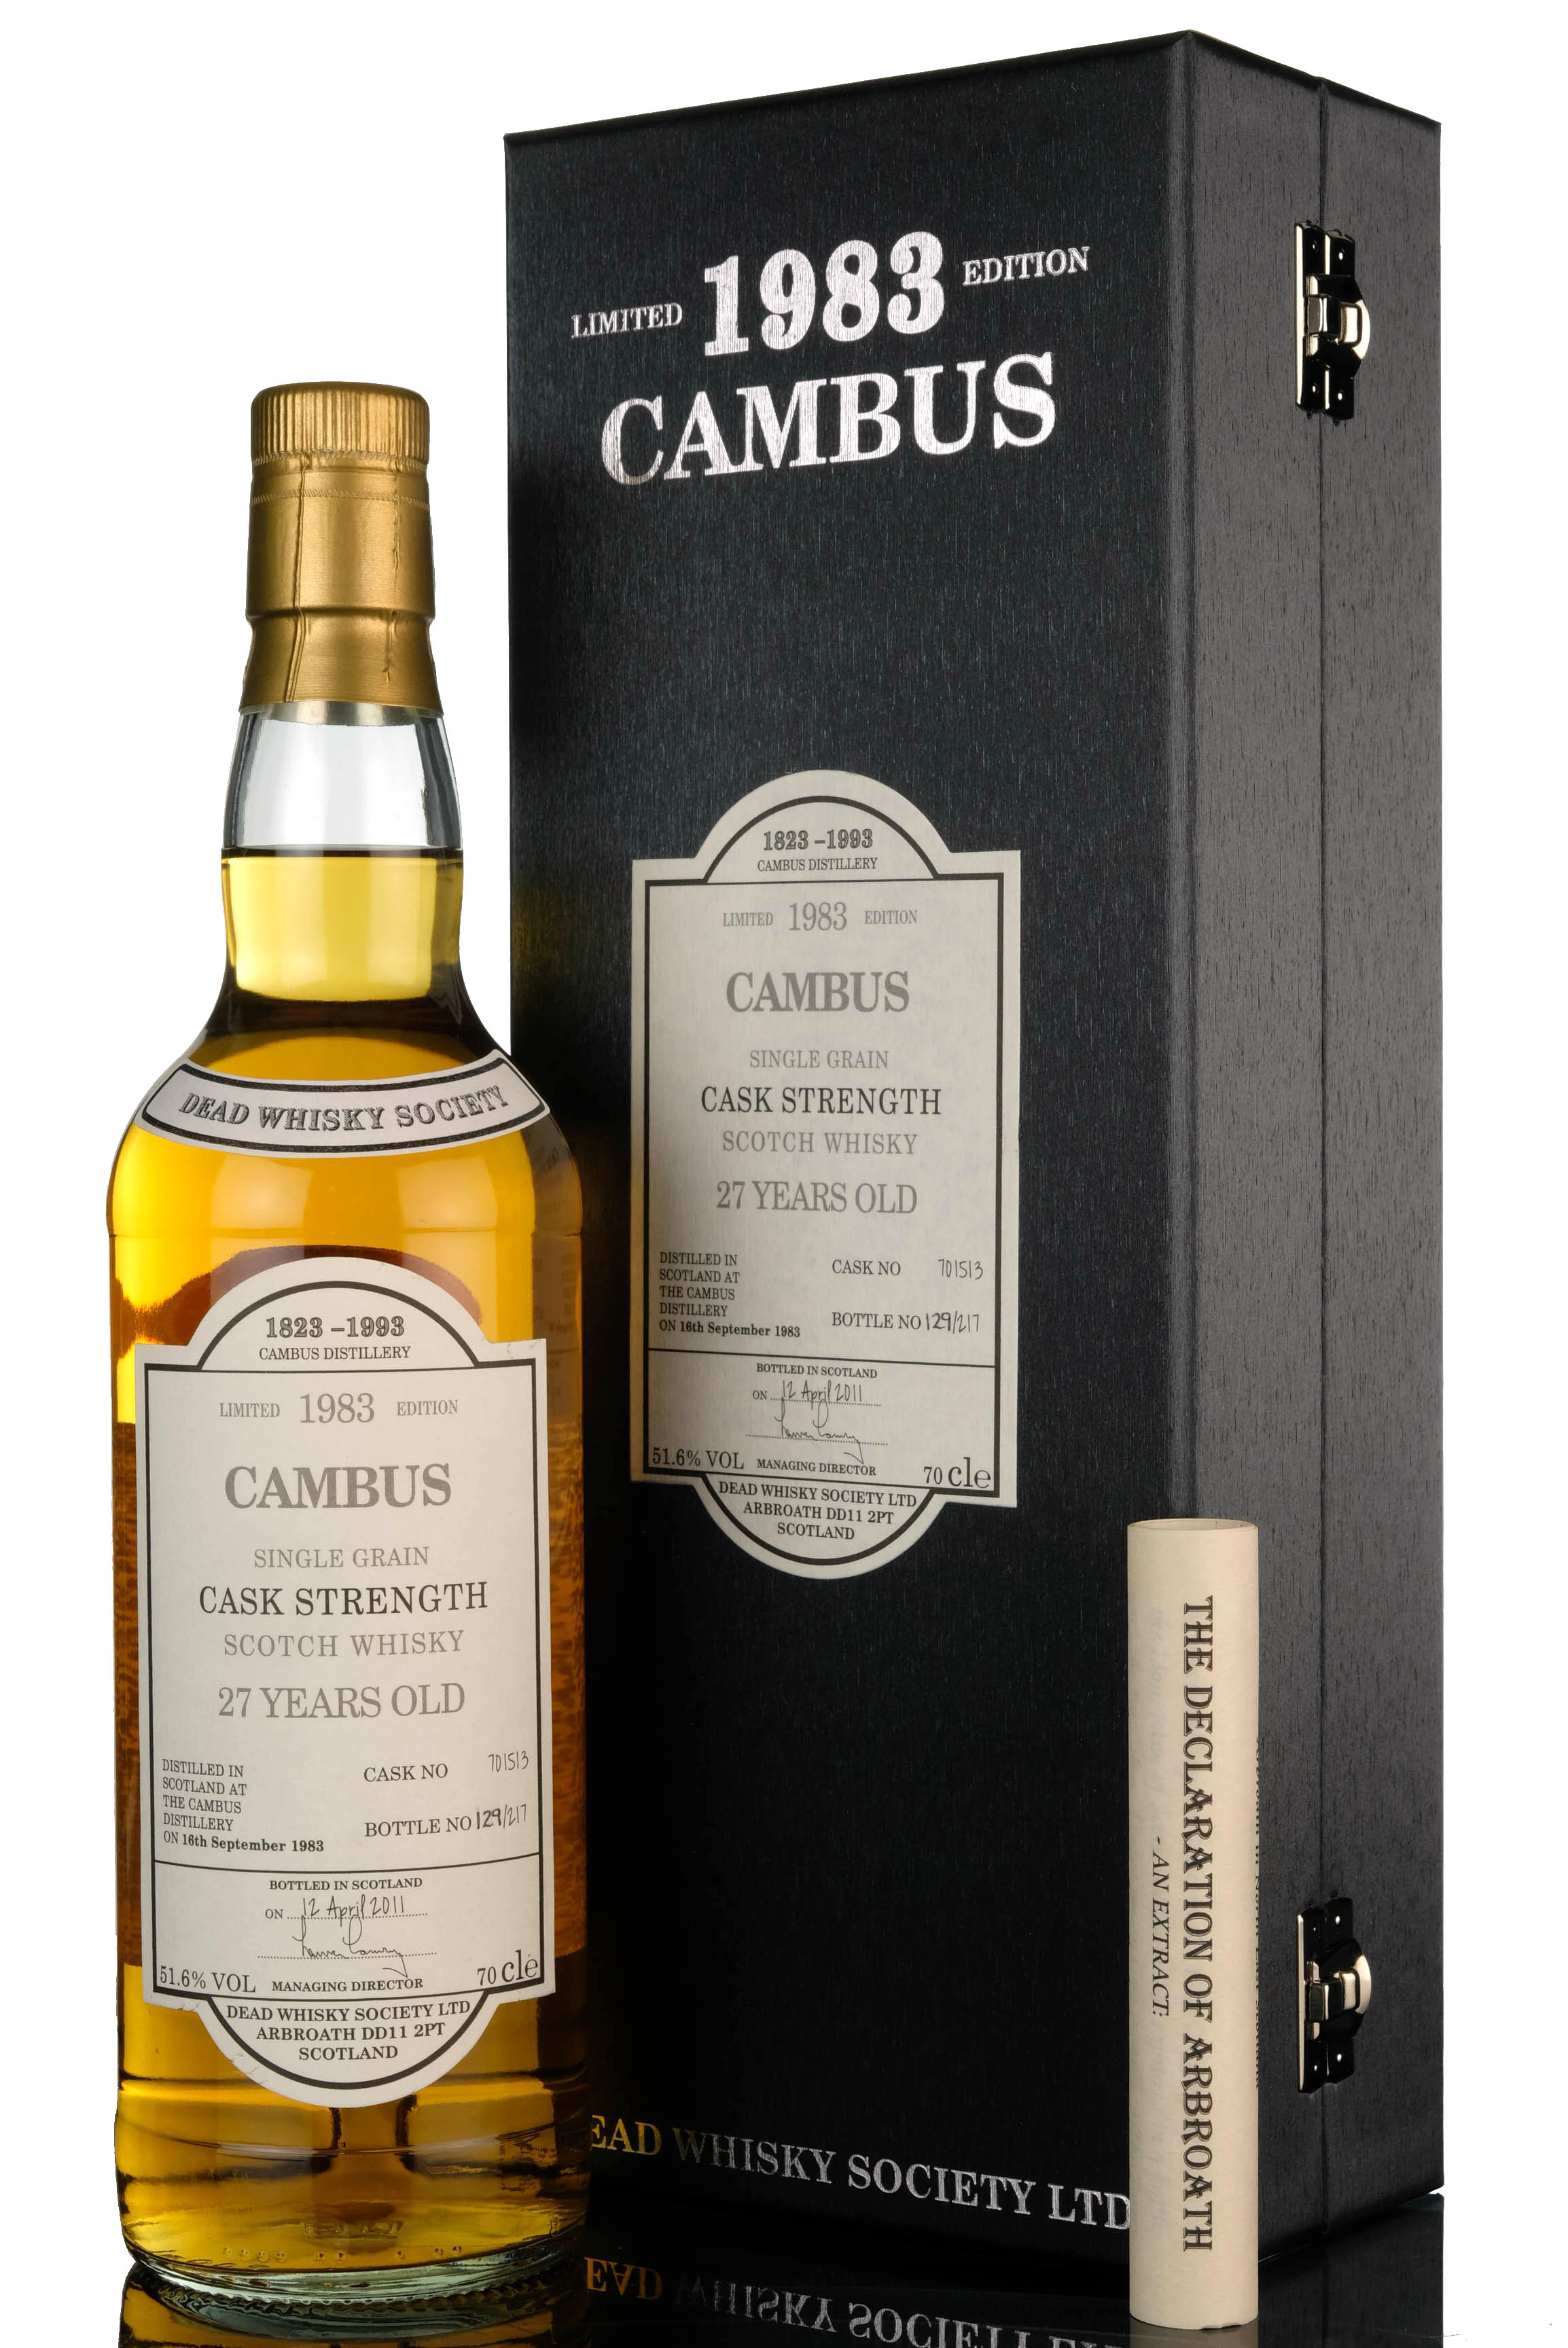 Cambus 1983-2011 - 27 Year Old - Dead Whisky Society